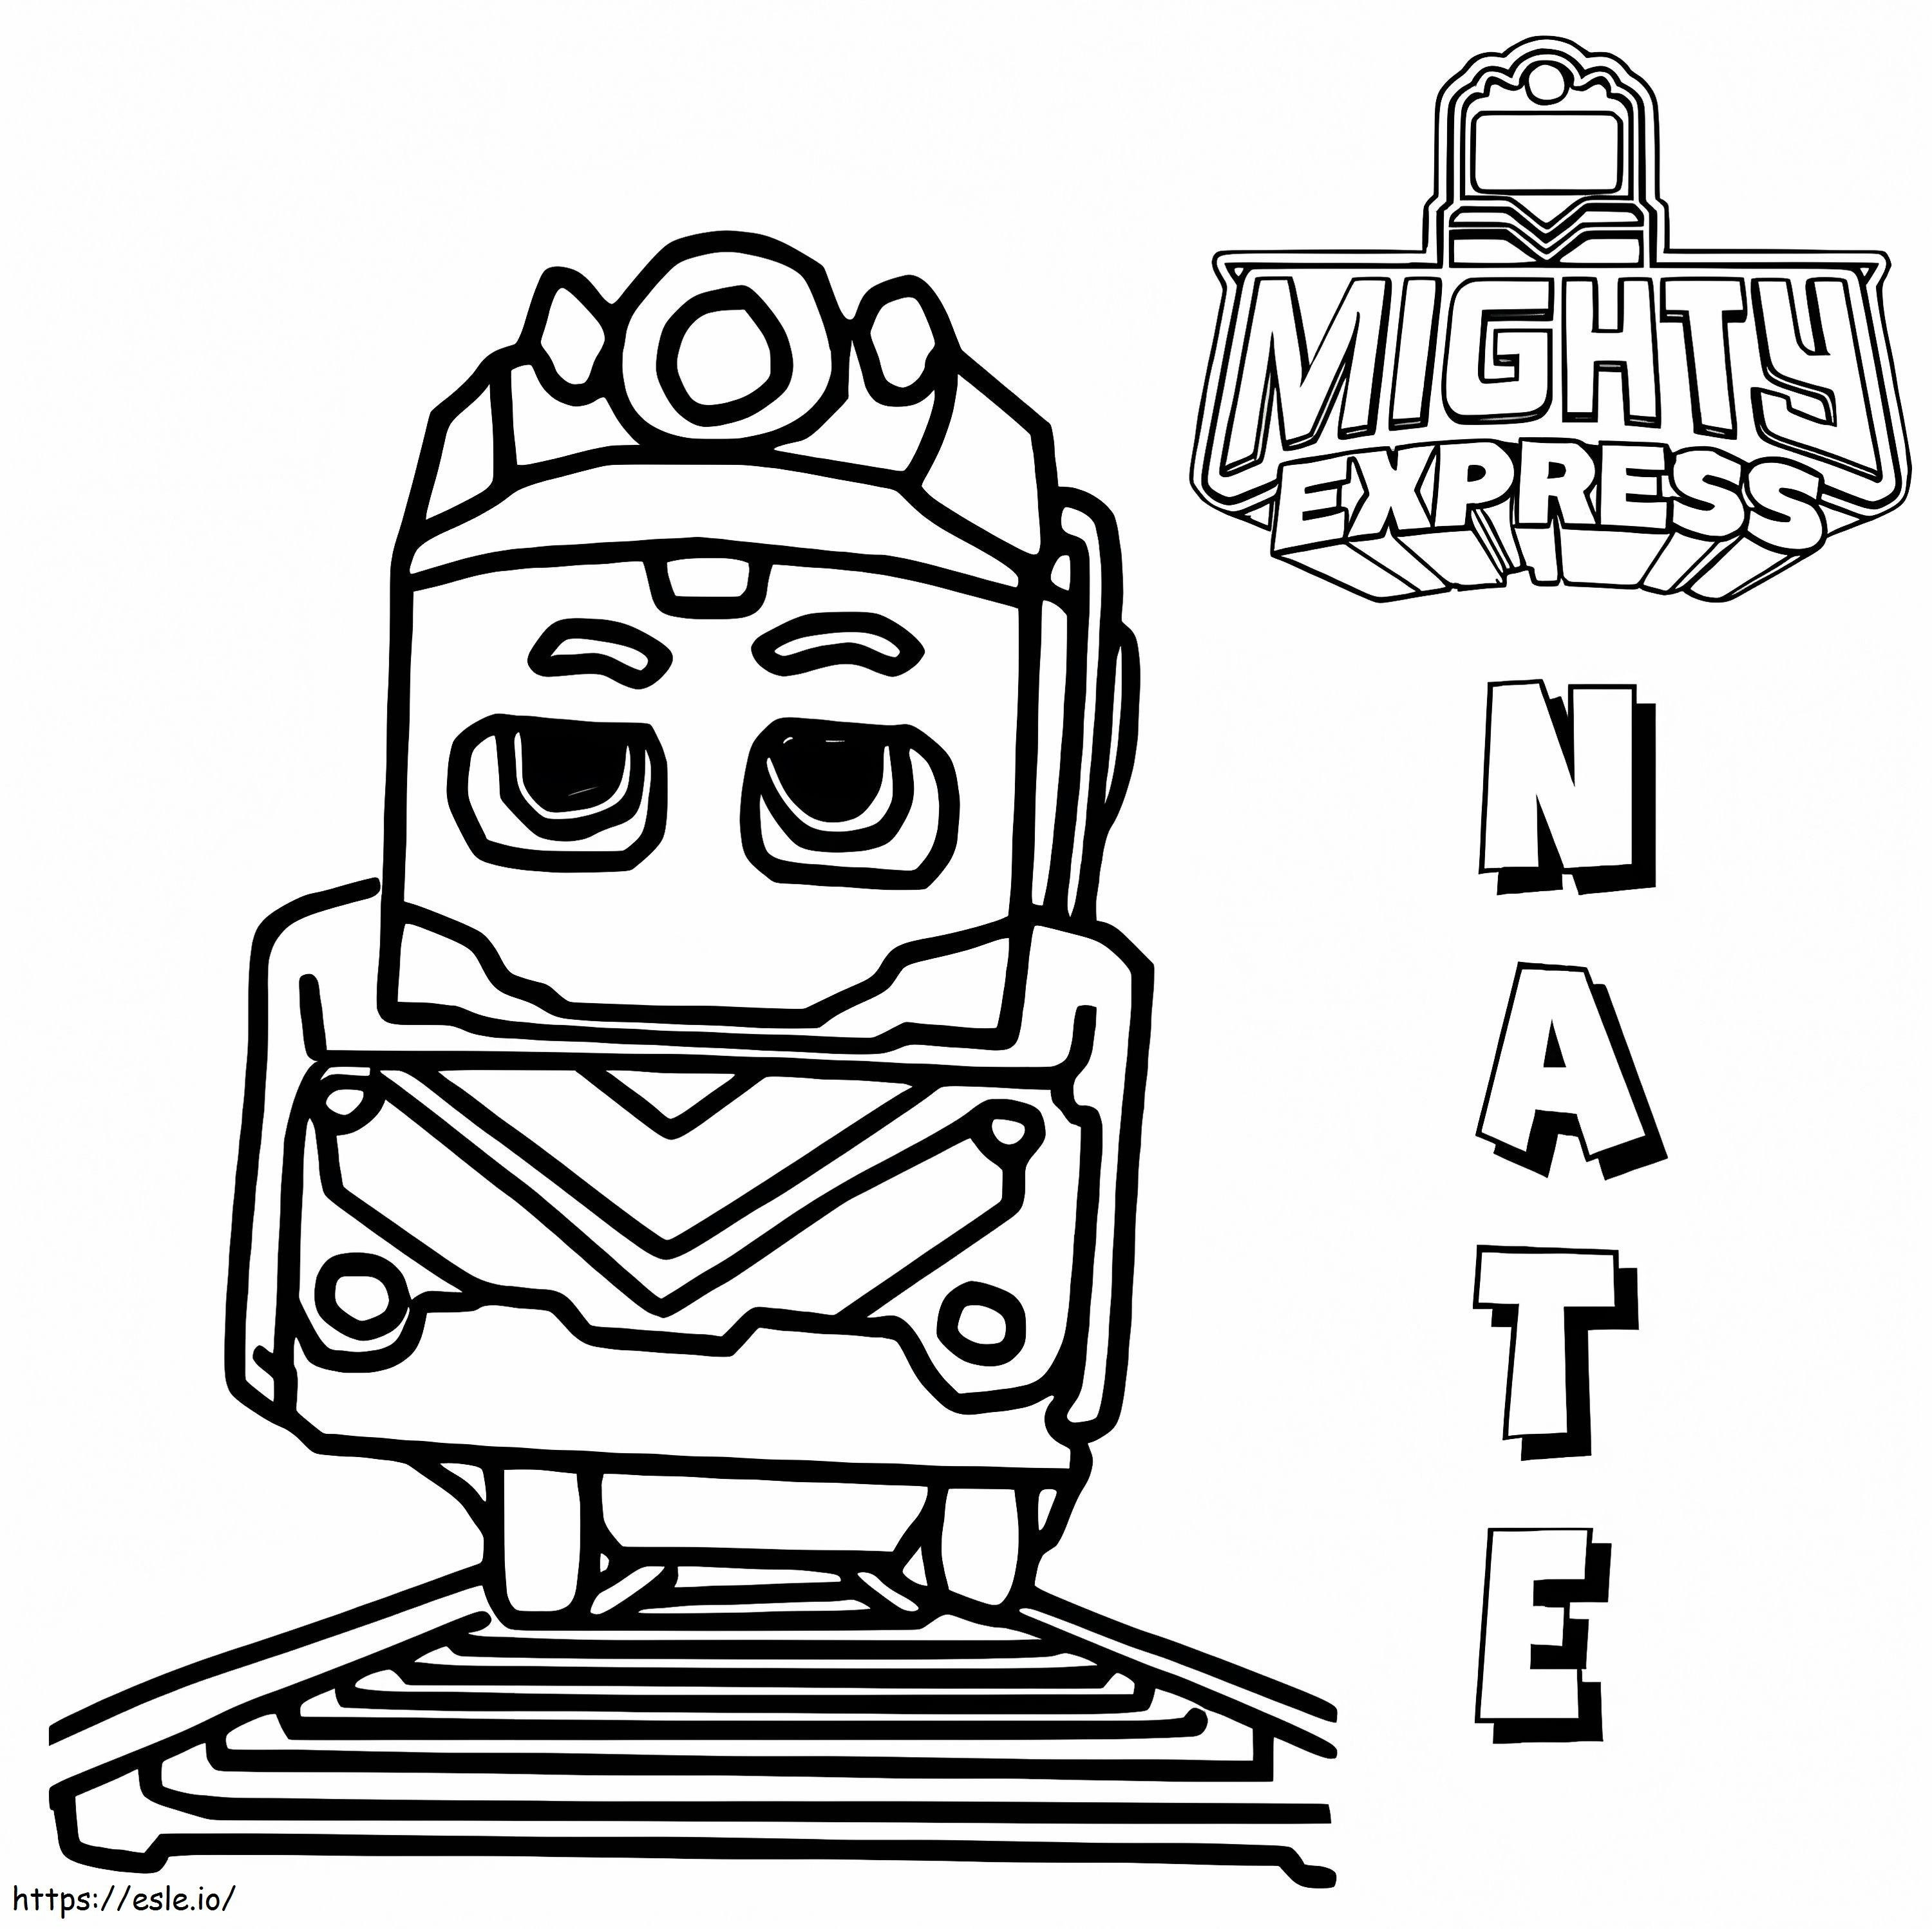 Frete Nate da Mighty Express para colorir